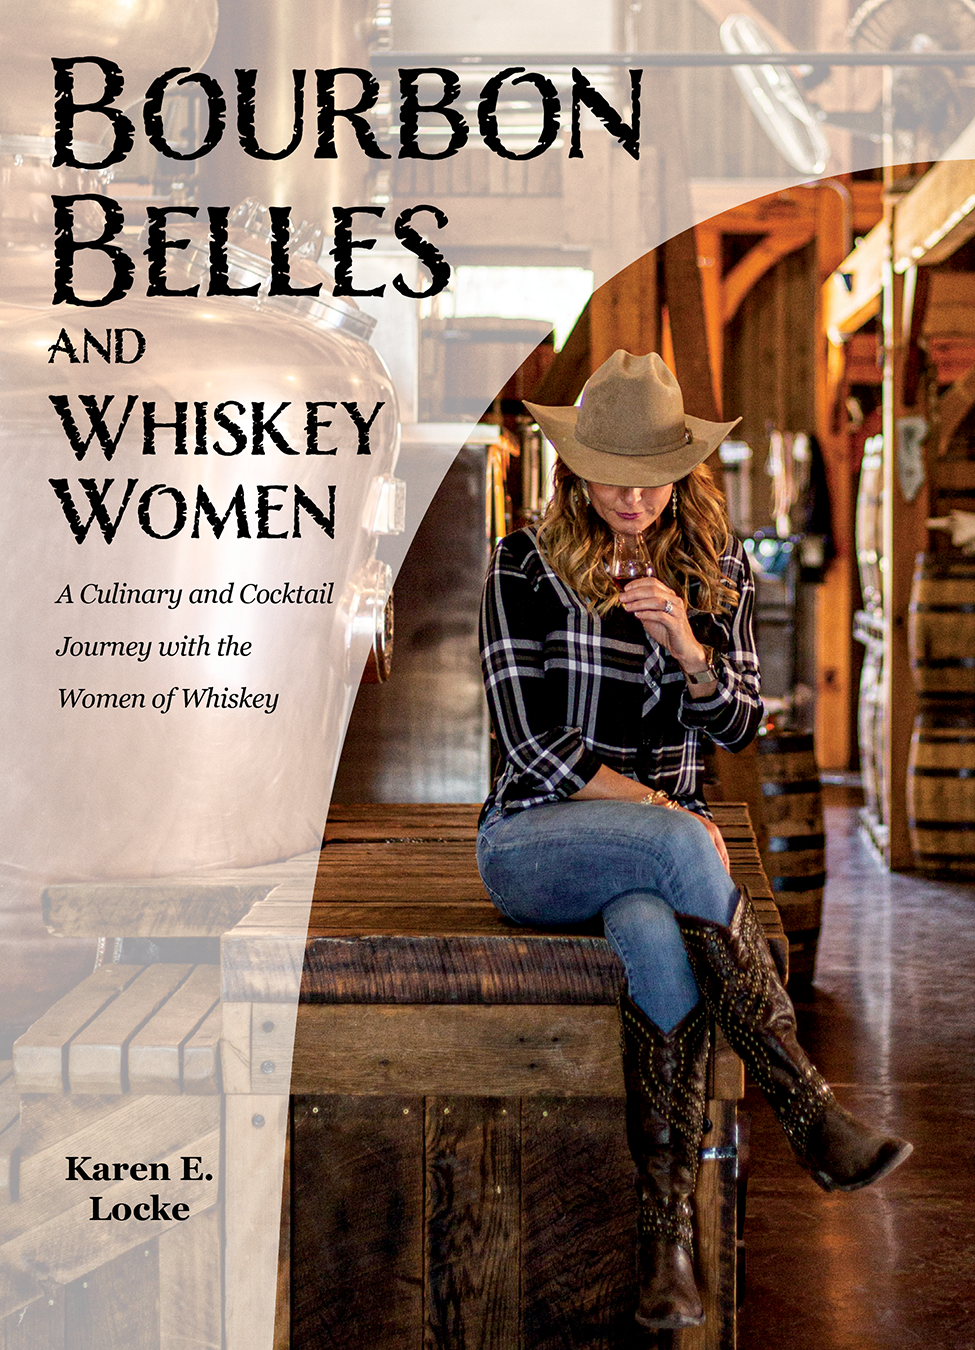 Bourbon Belles and Whiskey Women